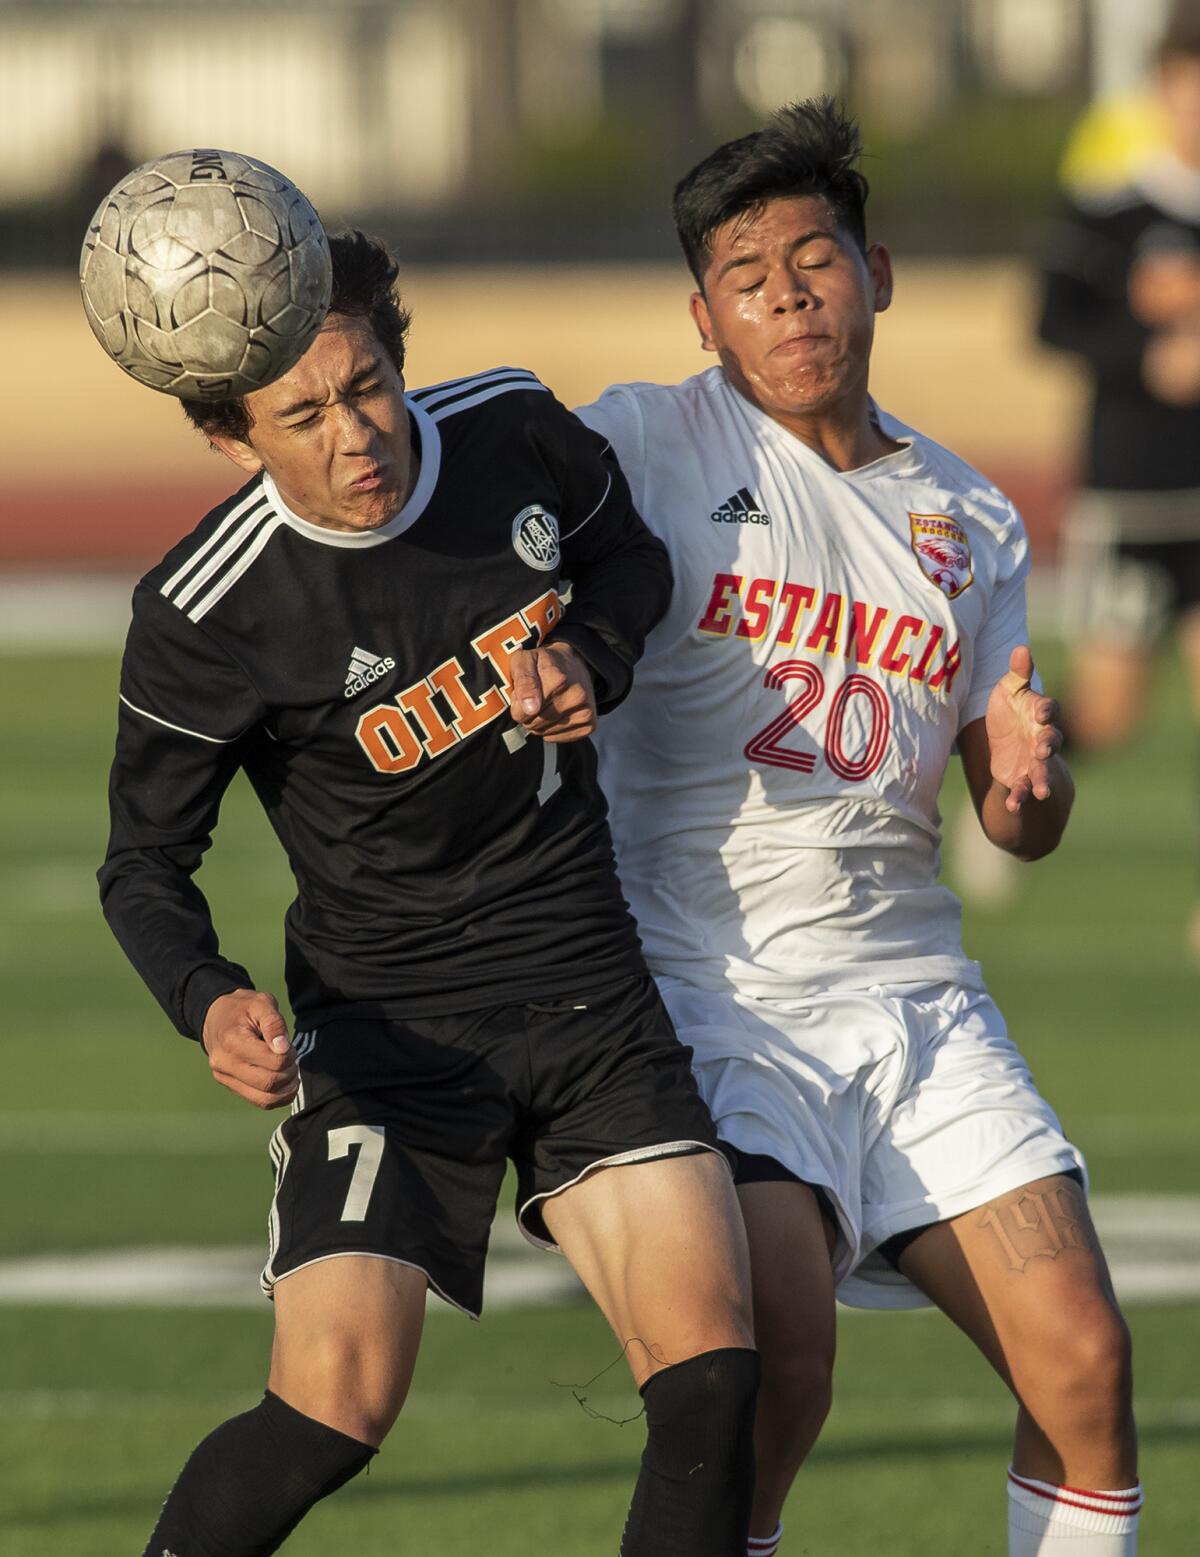 Huntington Beach's Carson Dykes and Estancia's Edwin Raymundo battle for a ball in a Division 2 boys' soccer playoff game.